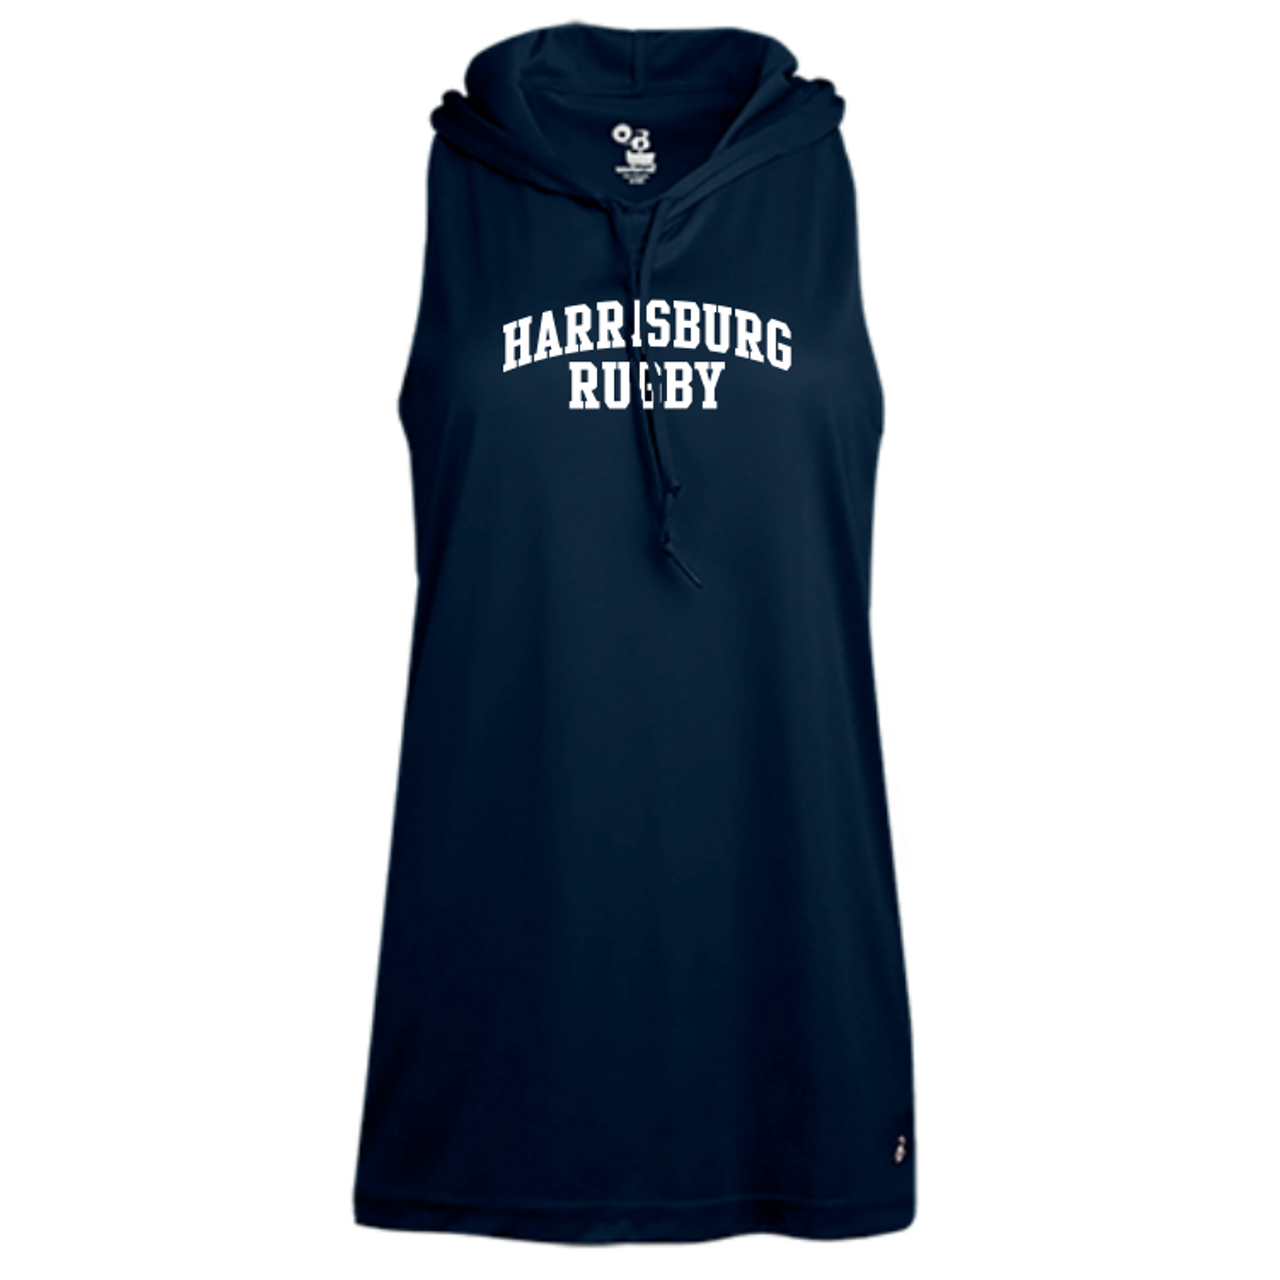 Harrisburg Rugby Hooded Sleeveless Performance Shirt